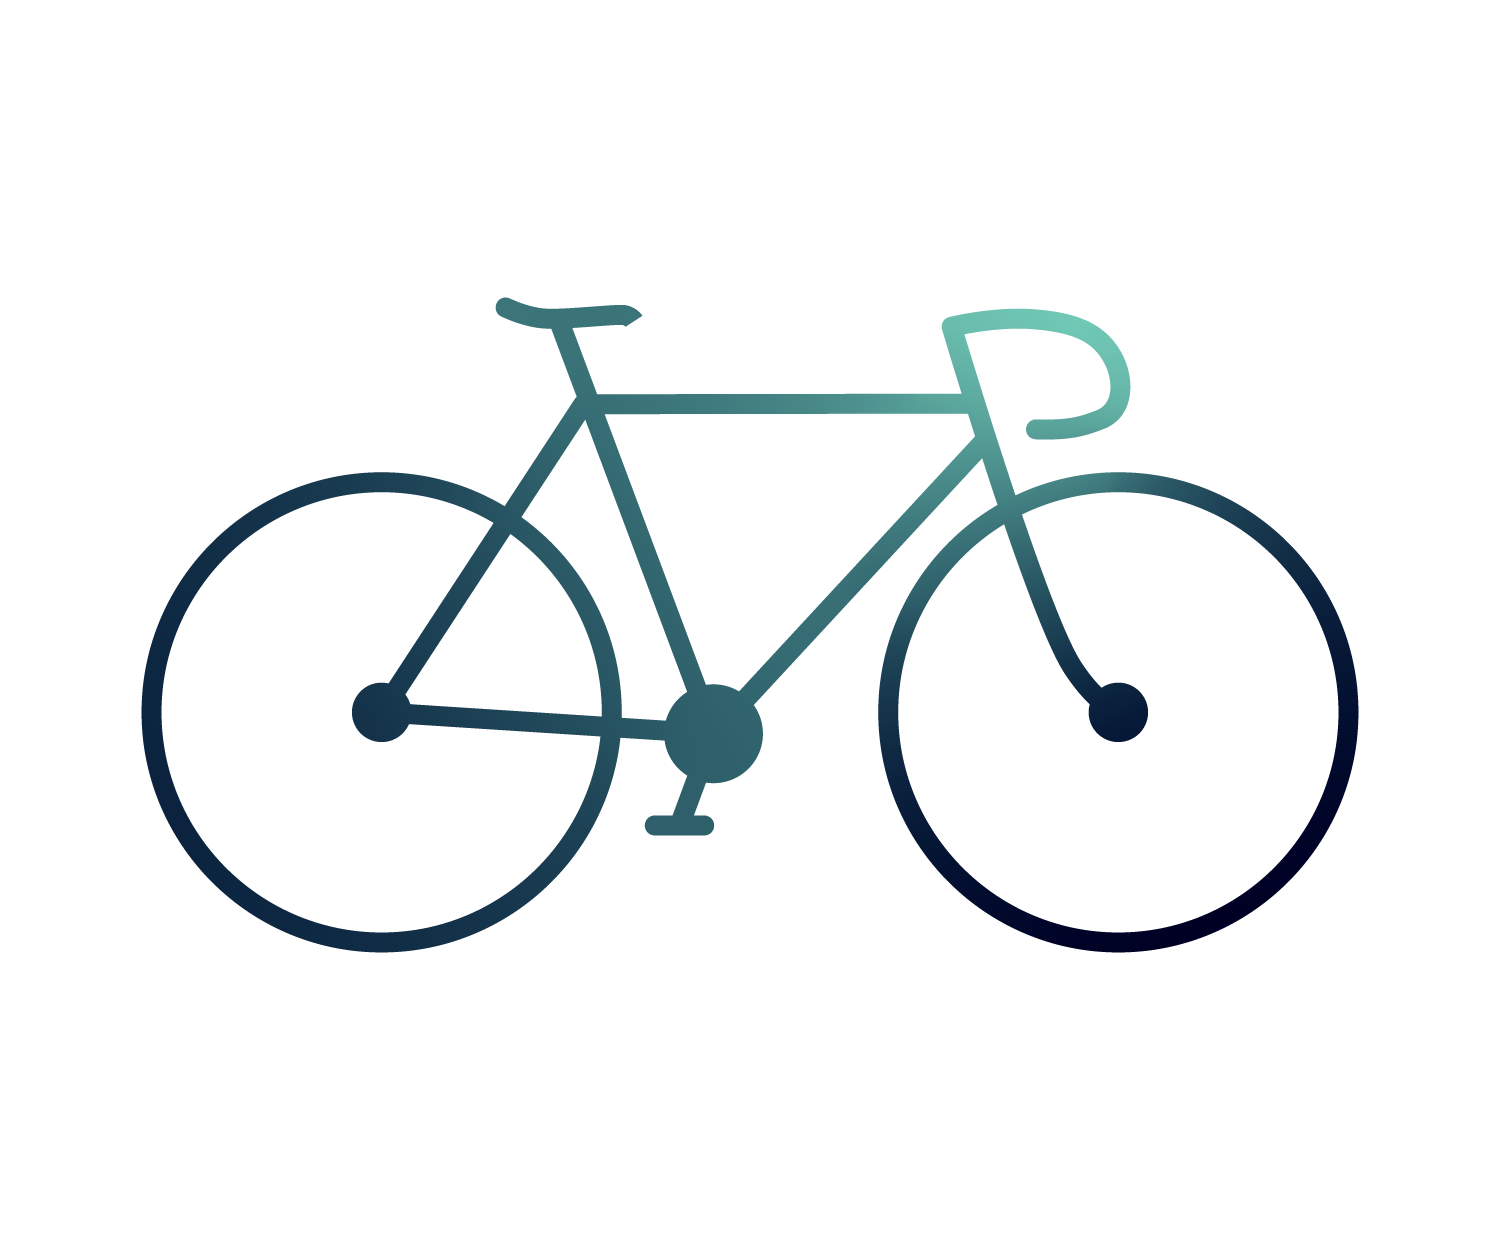 Join The Bike Shop Ride Club - The Bike Shop